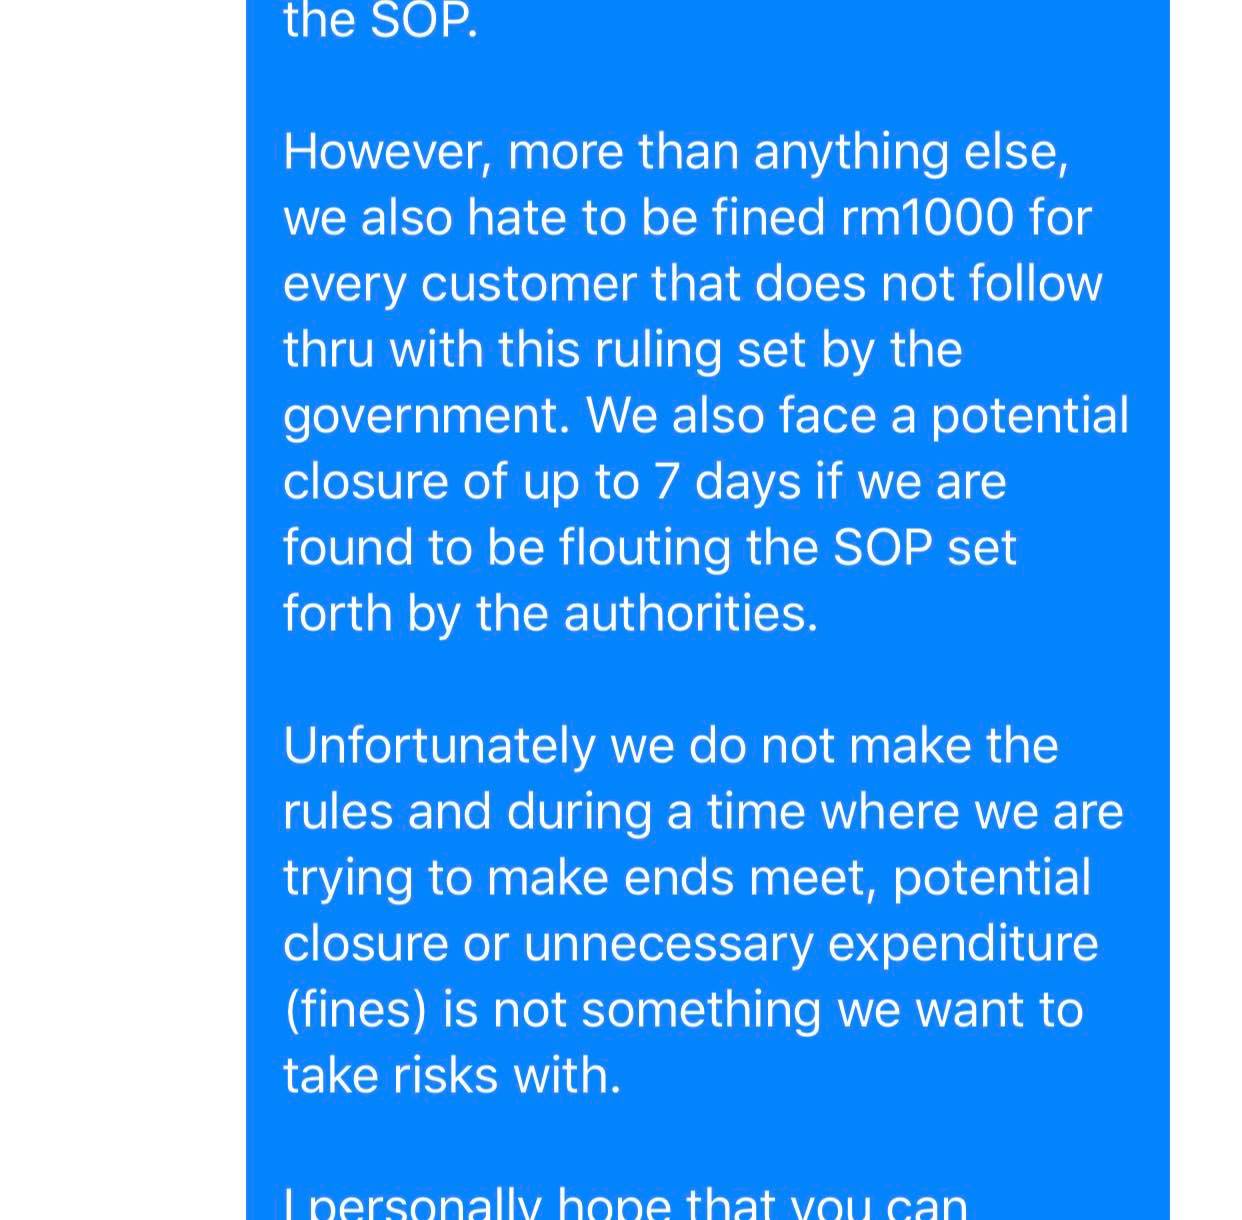 myBurgerLab SOP complaint - response